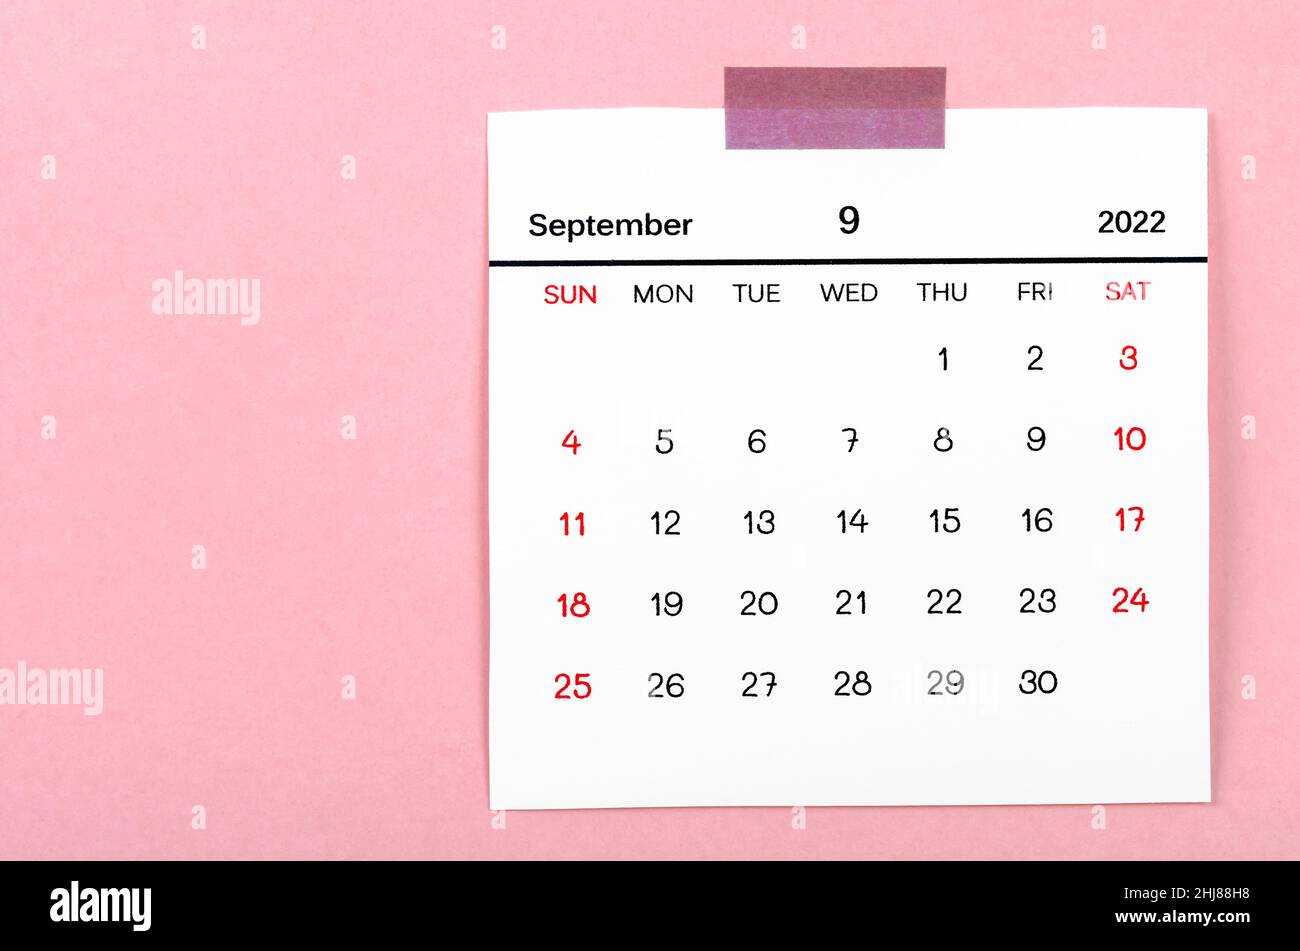 The September 2022 calendar on pink background. Stock Photo